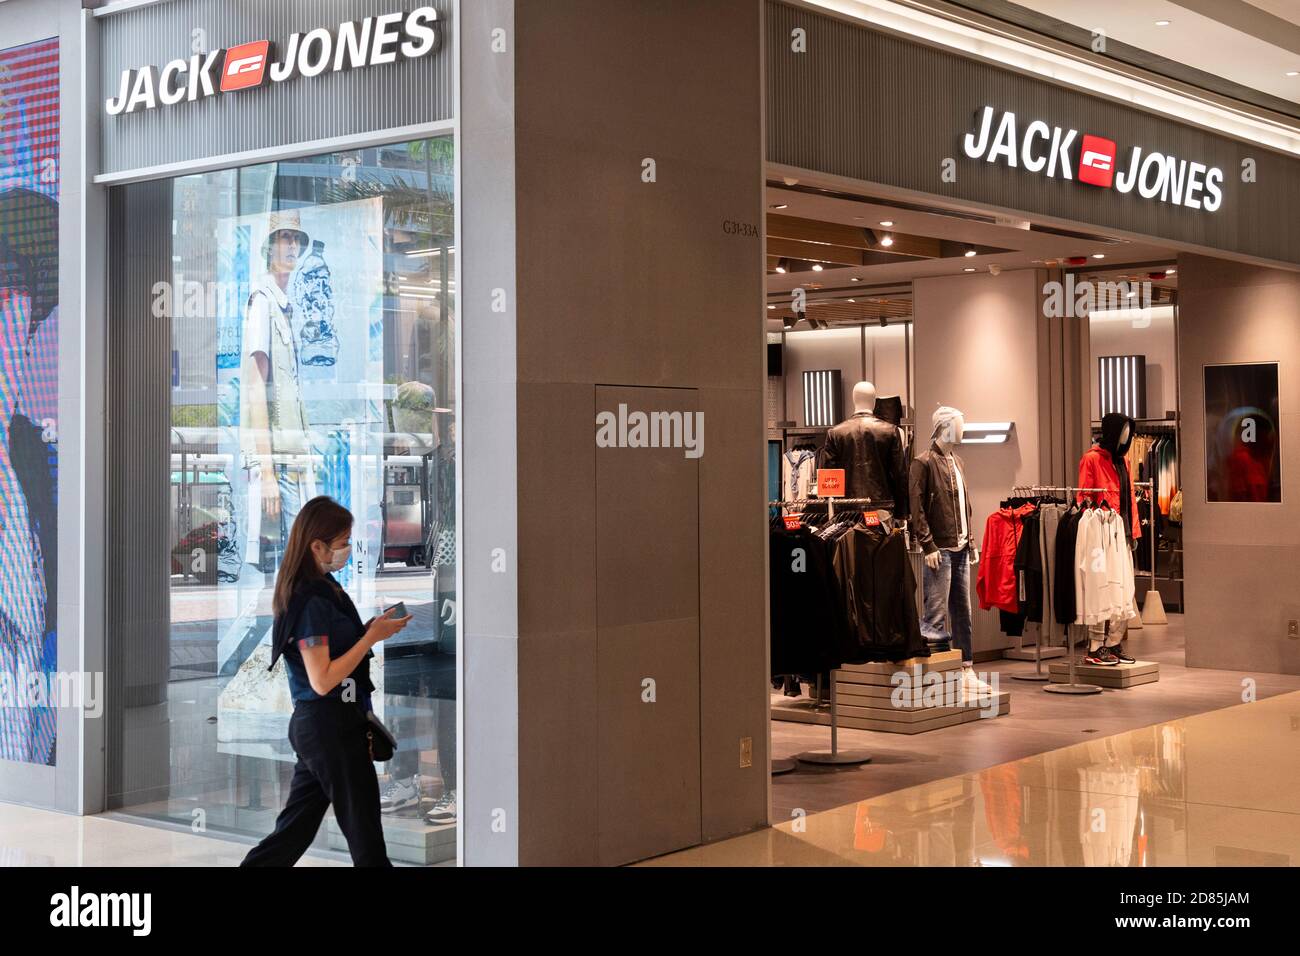 Danish fashion clothing brand Jack Jones store seen in Hong Kong Stock  Photo - Alamy